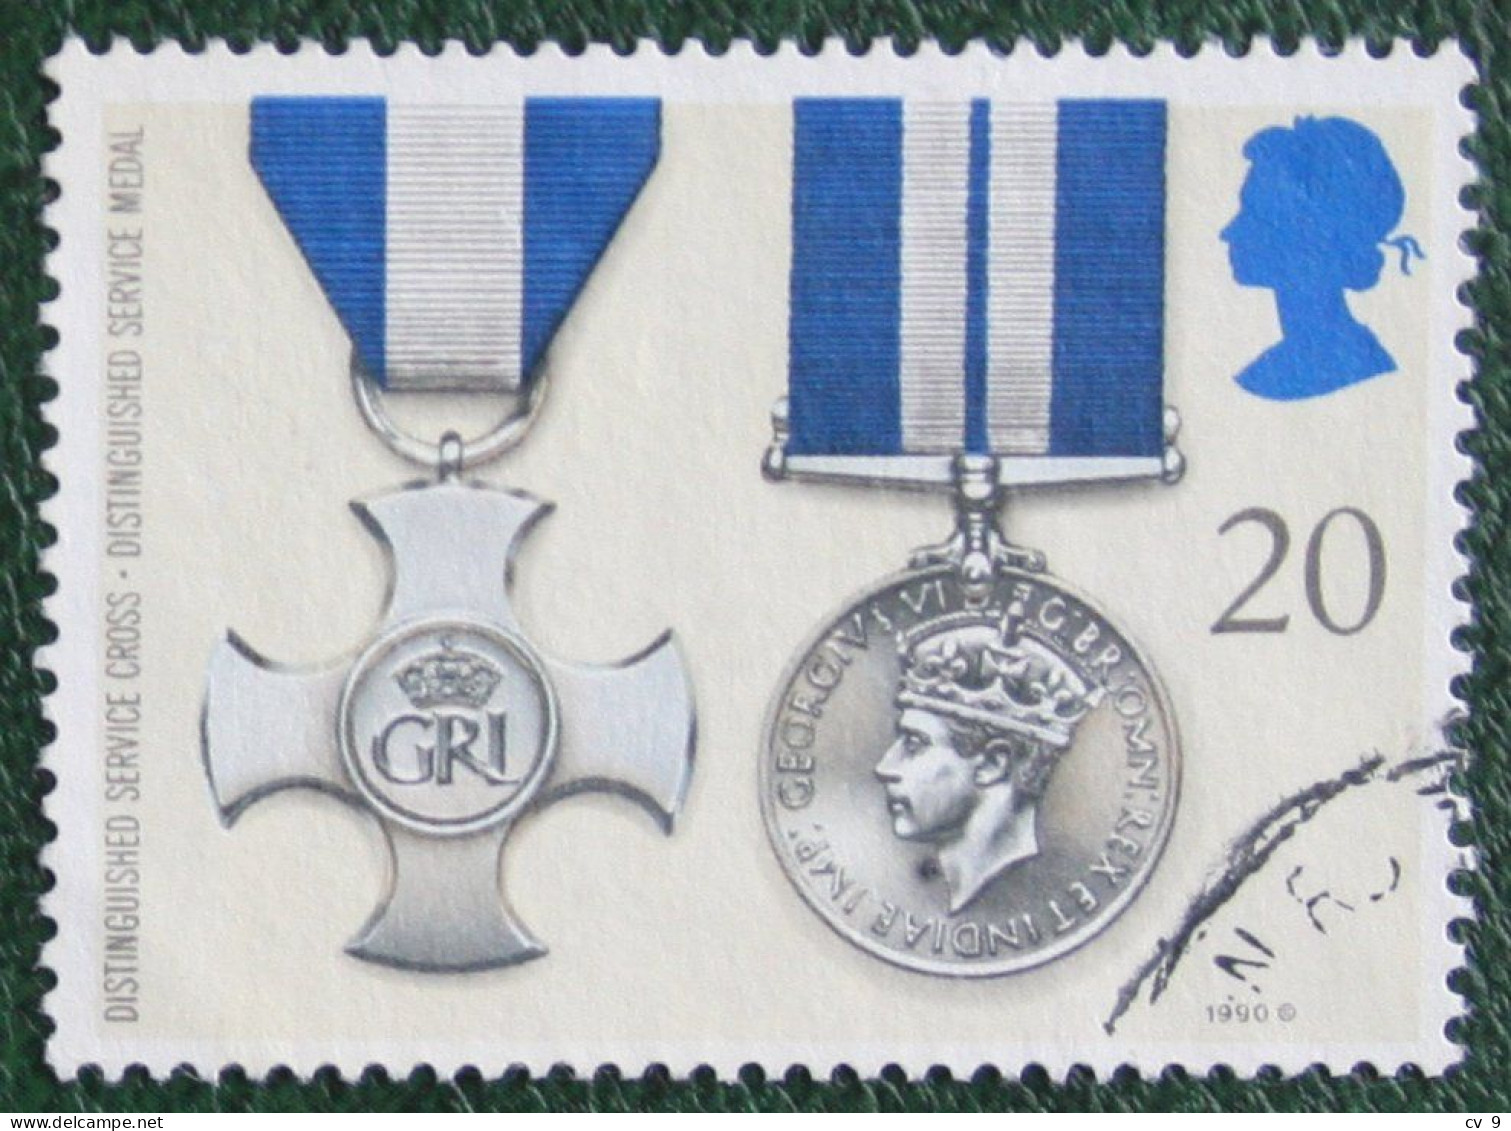 Awards Bravery Medals (Mi 1294) 1990 Used Gebruikt Oblitere ENGLAND GRANDE-BRETAGNE GB GREAT BRITAIN - Used Stamps